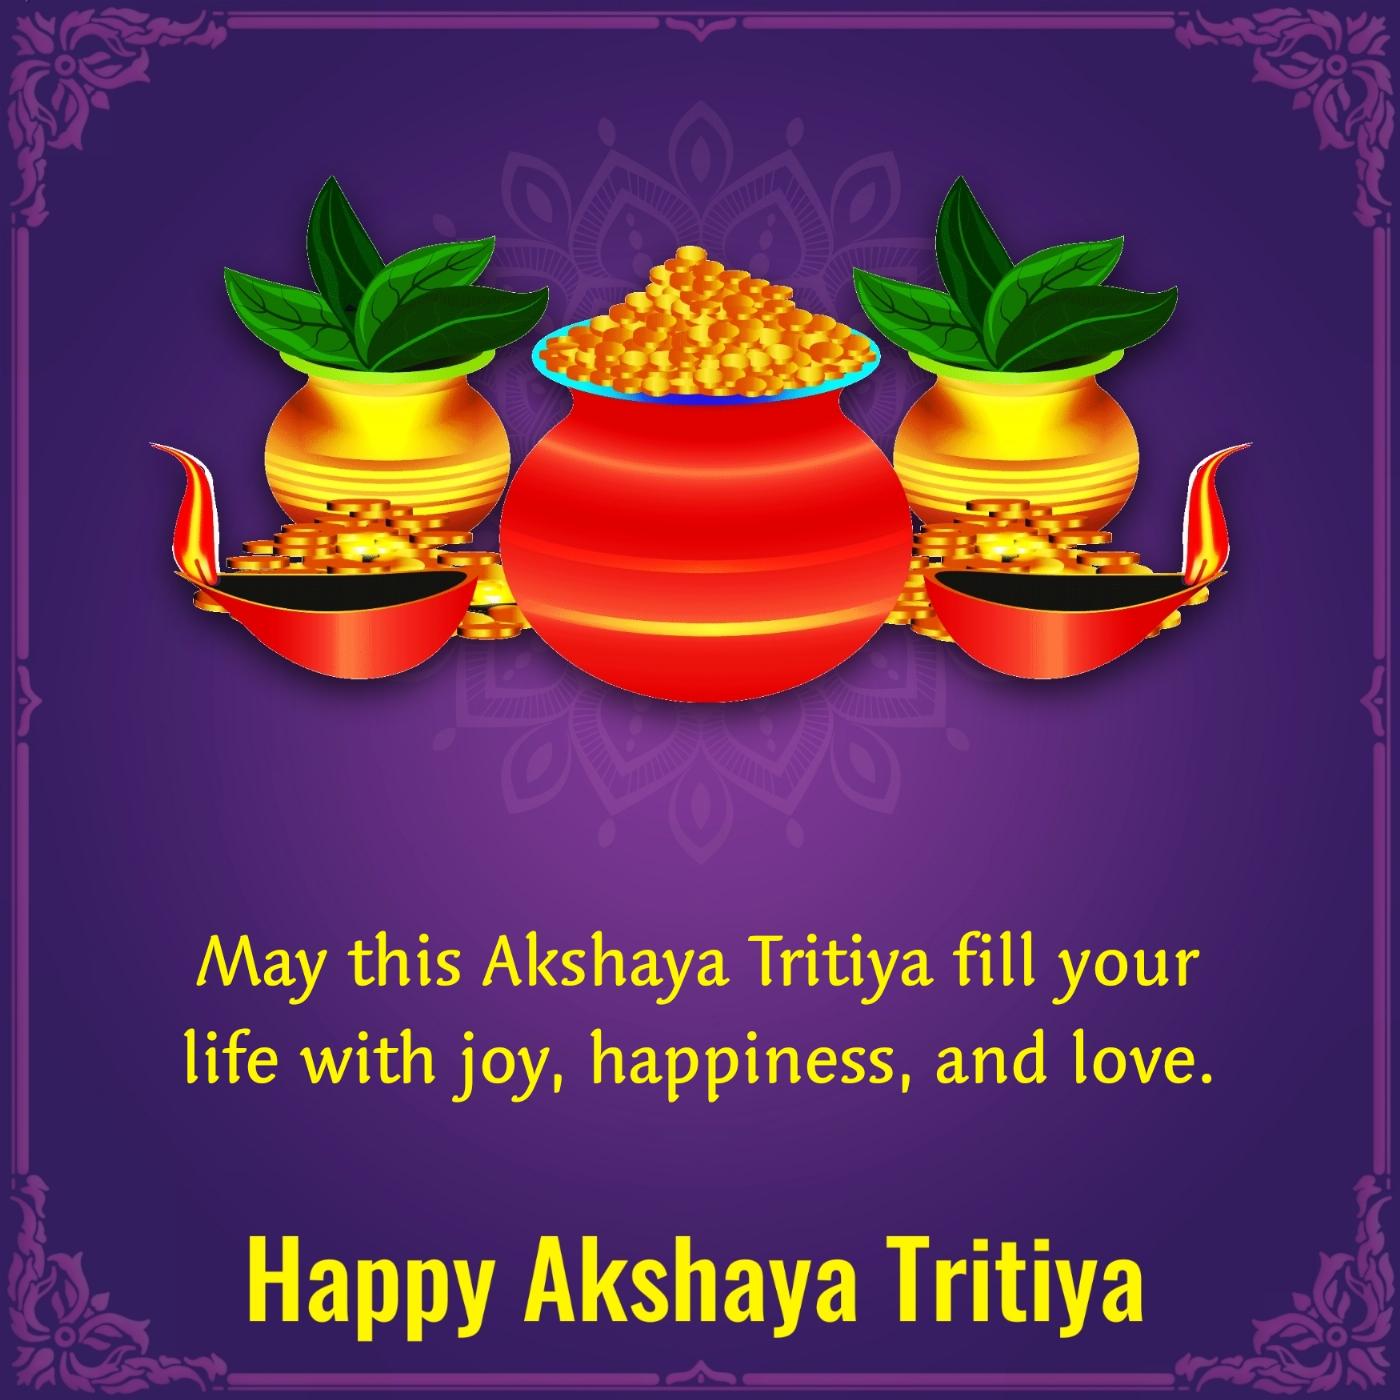 May this Akshaya Tritiya fill your life with joy happiness